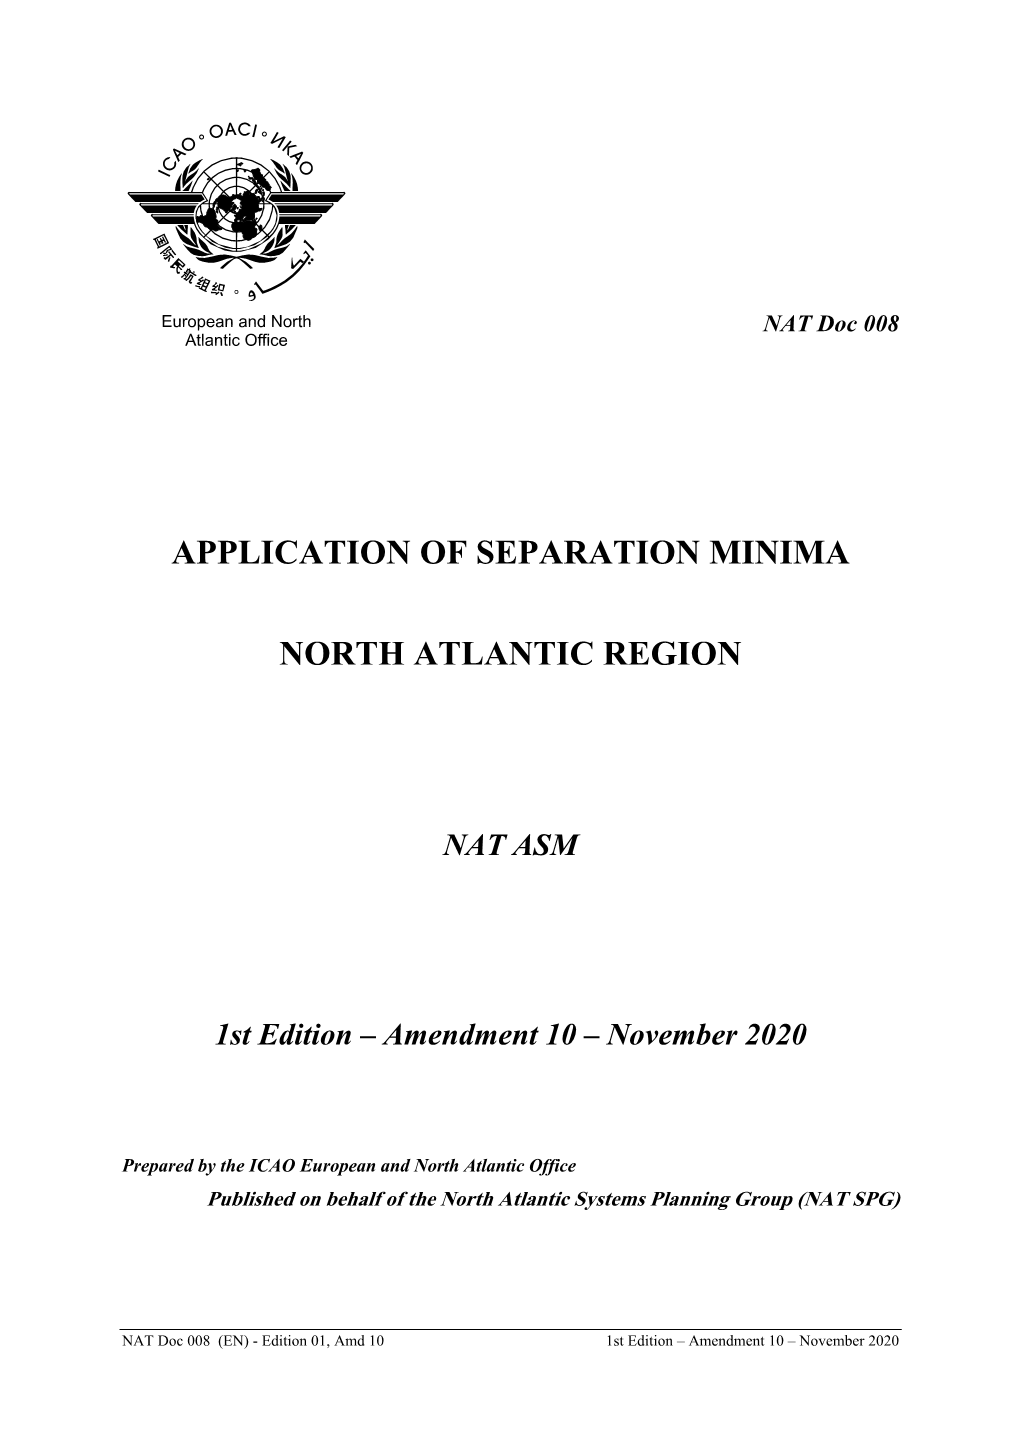 Application of Separation Minima North Atlantic Region